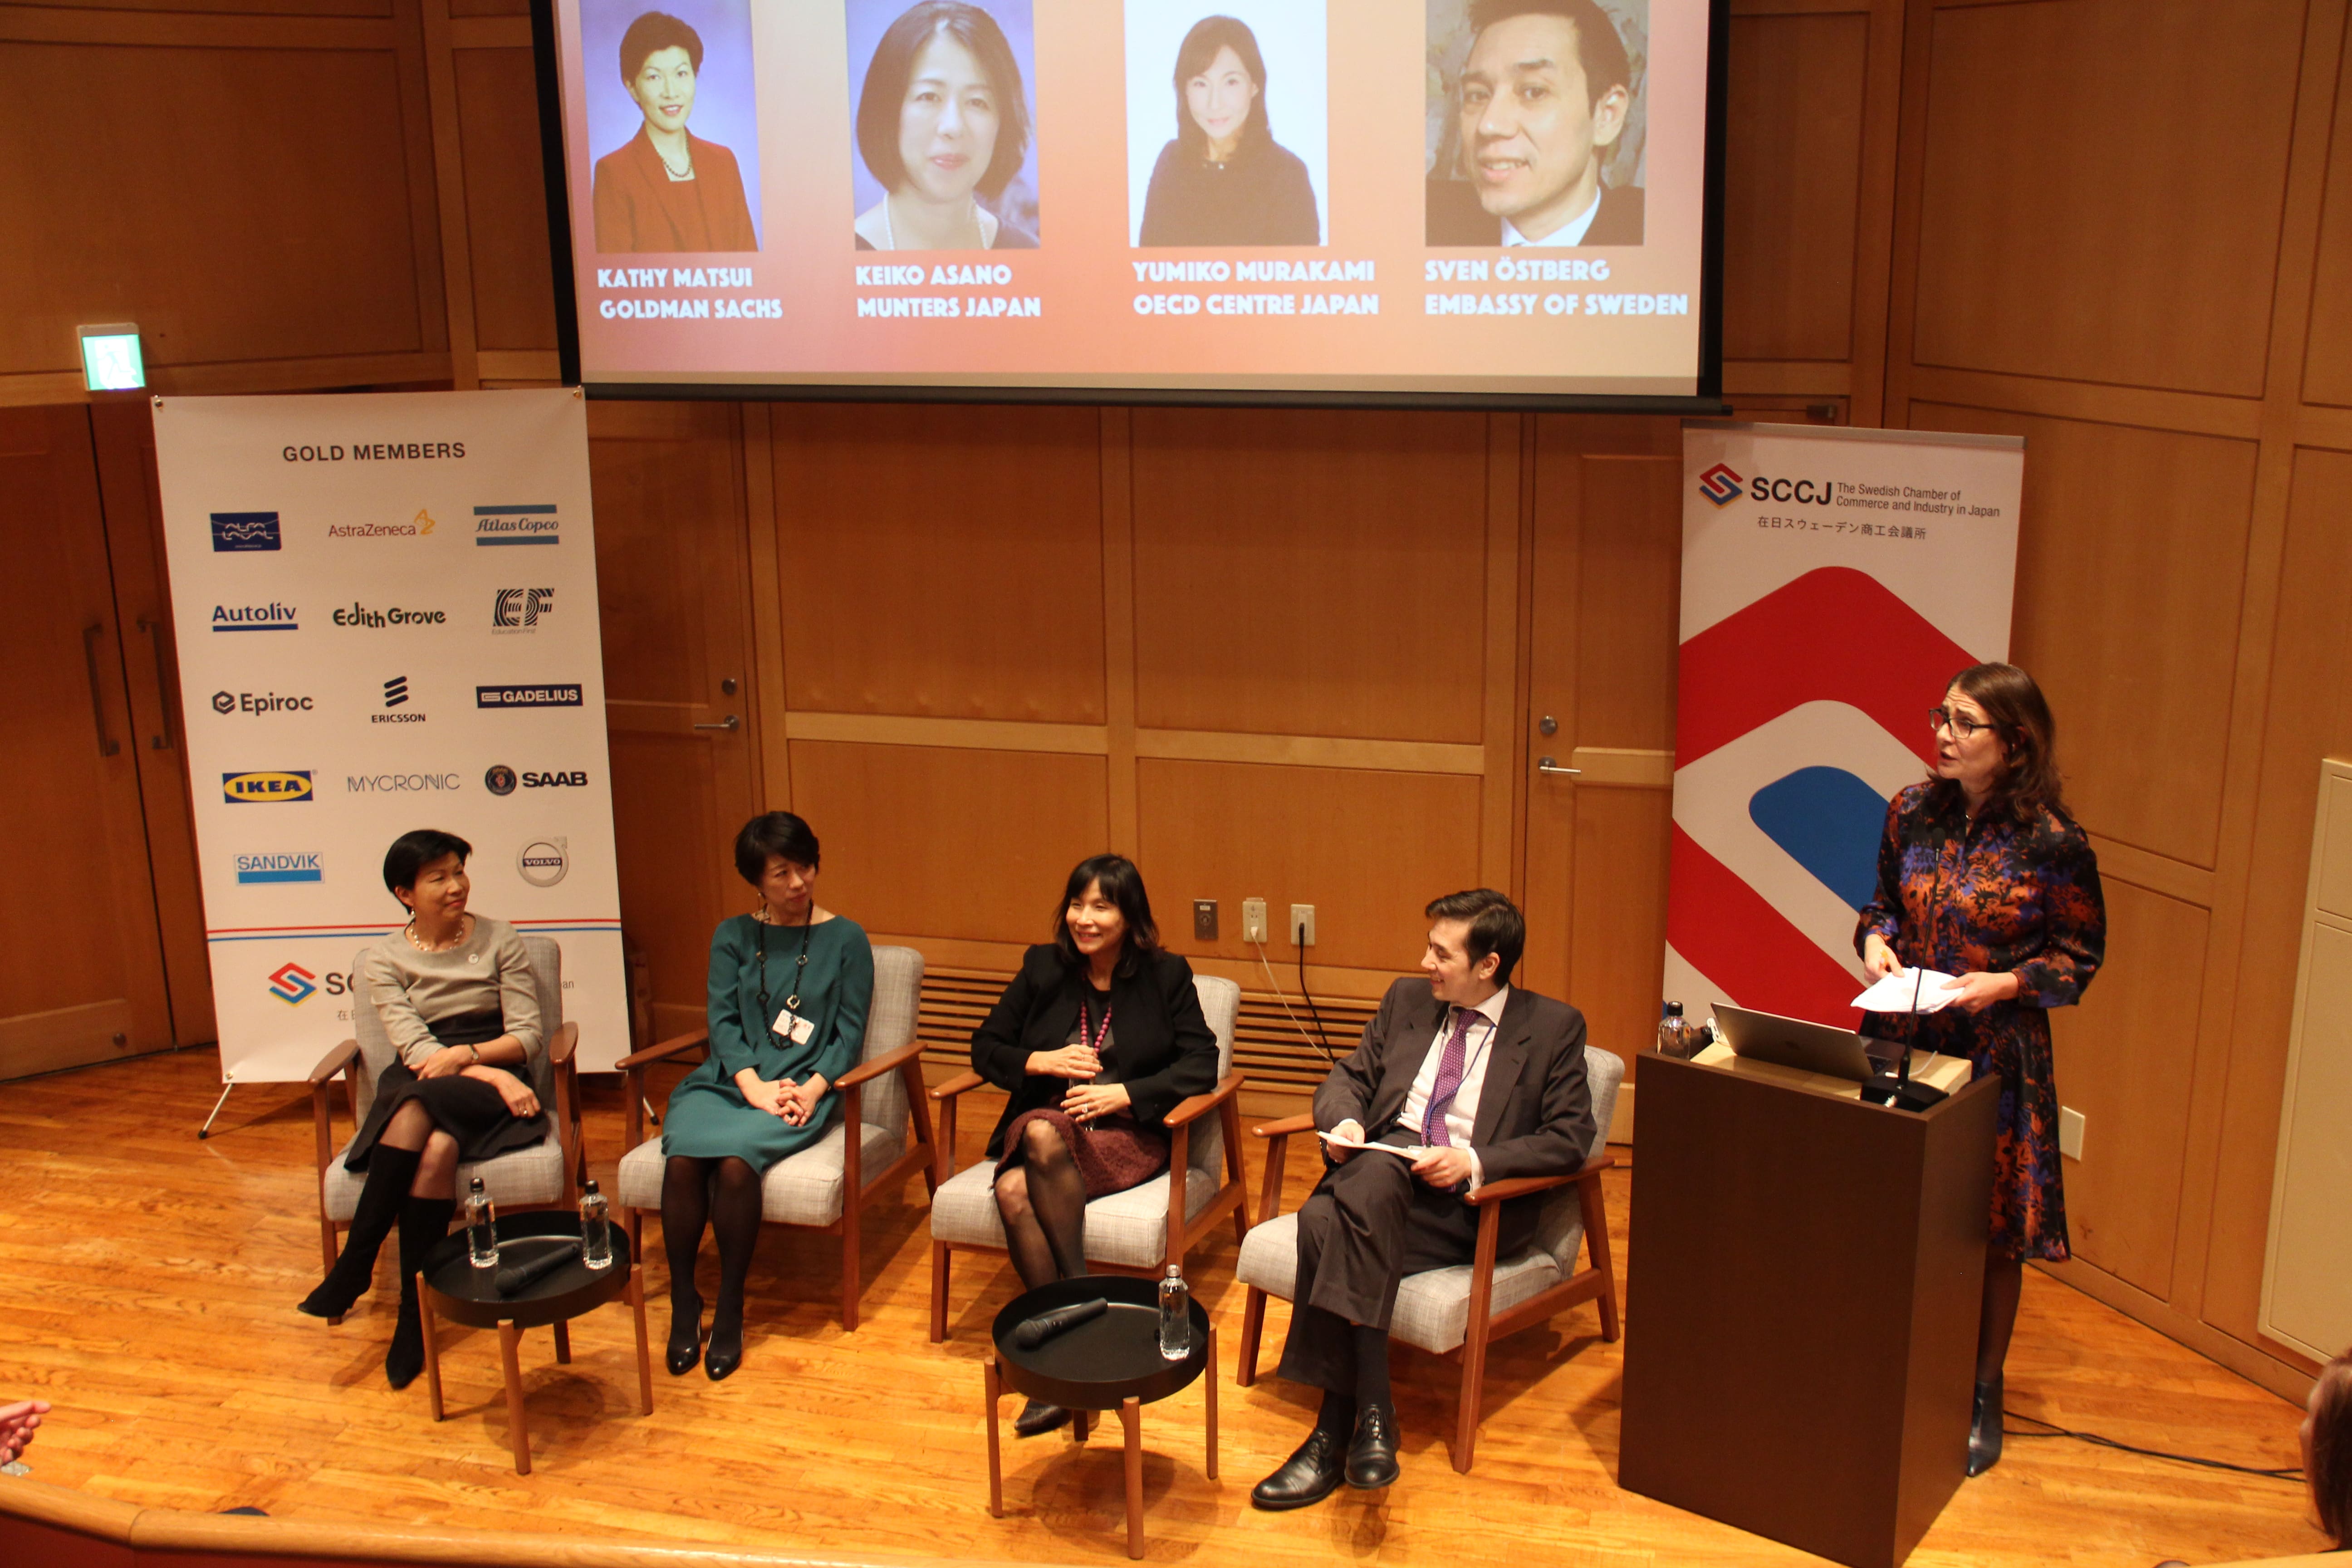 Event Report: "Build Better Business Through Diversity"